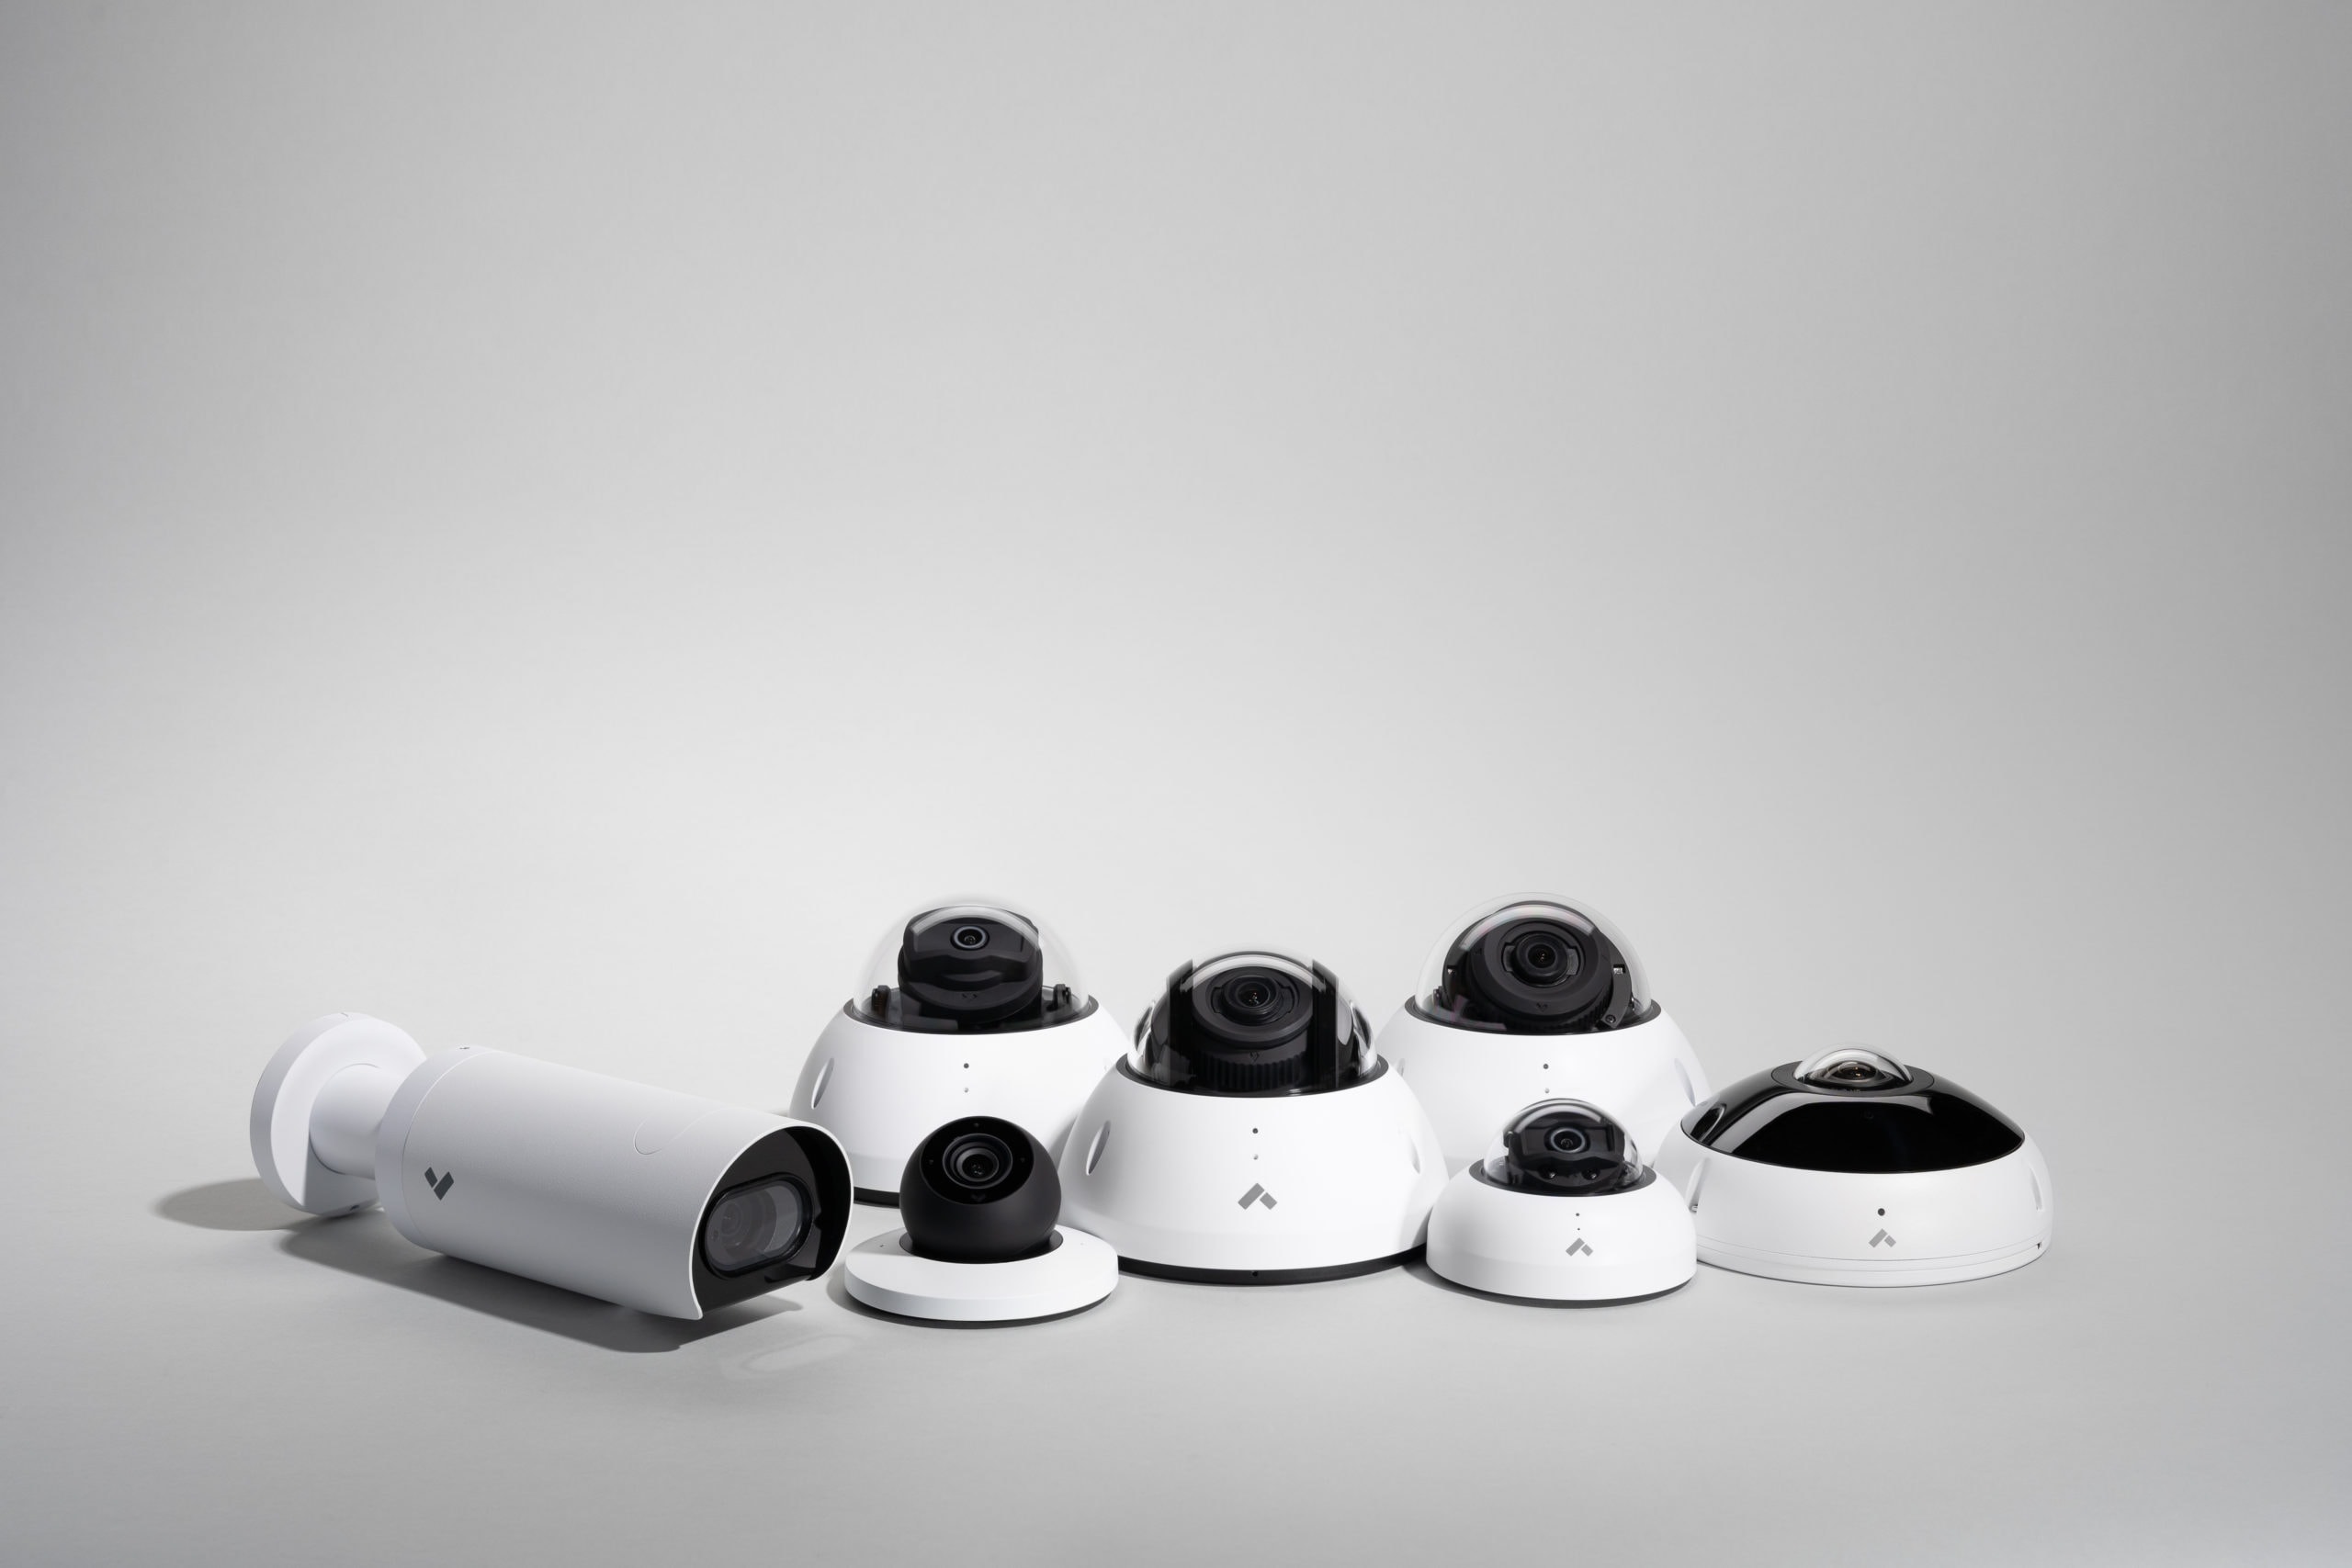 Verkada Camera Family - all cameras have facial recognition capabilities